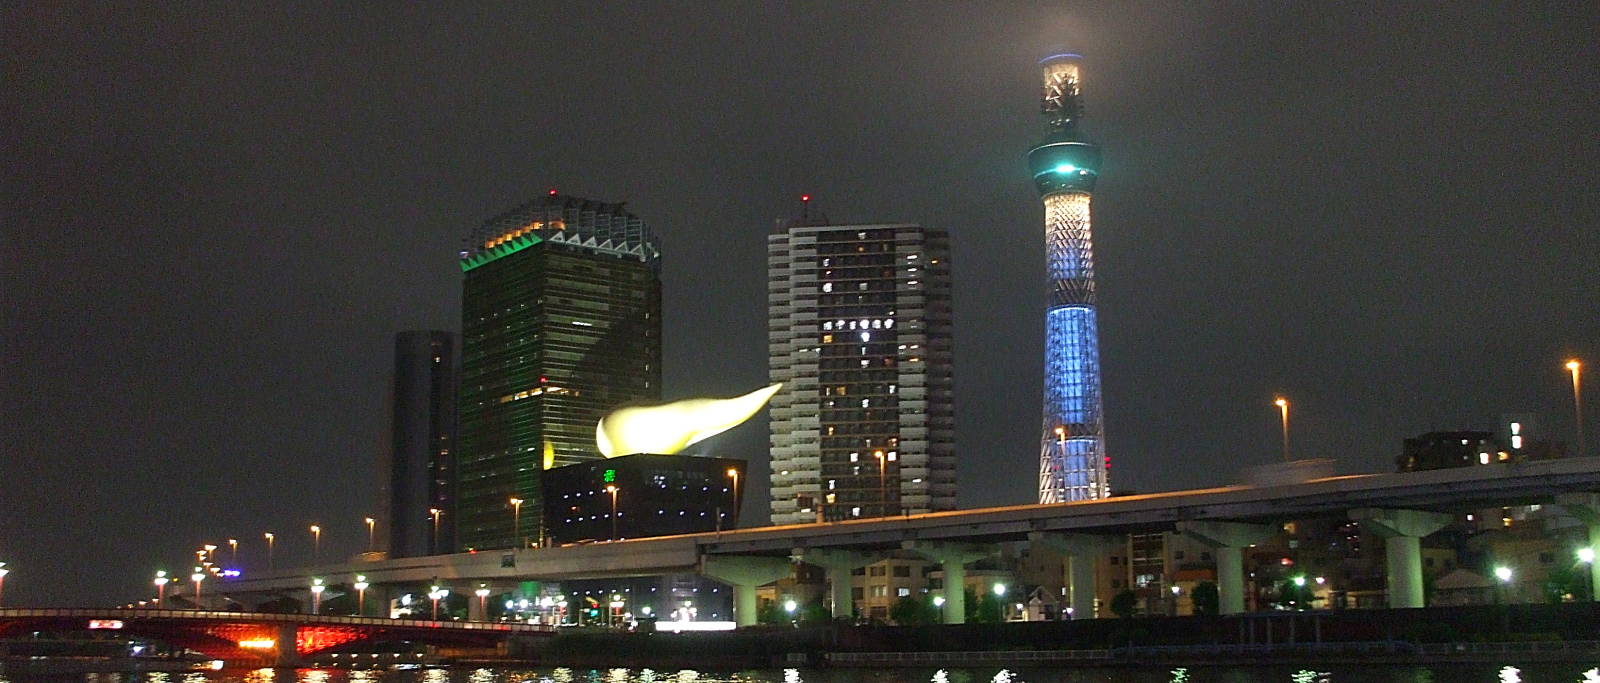 Lighted buildings at night along the Sumida River in Asakusa, Tōkyō